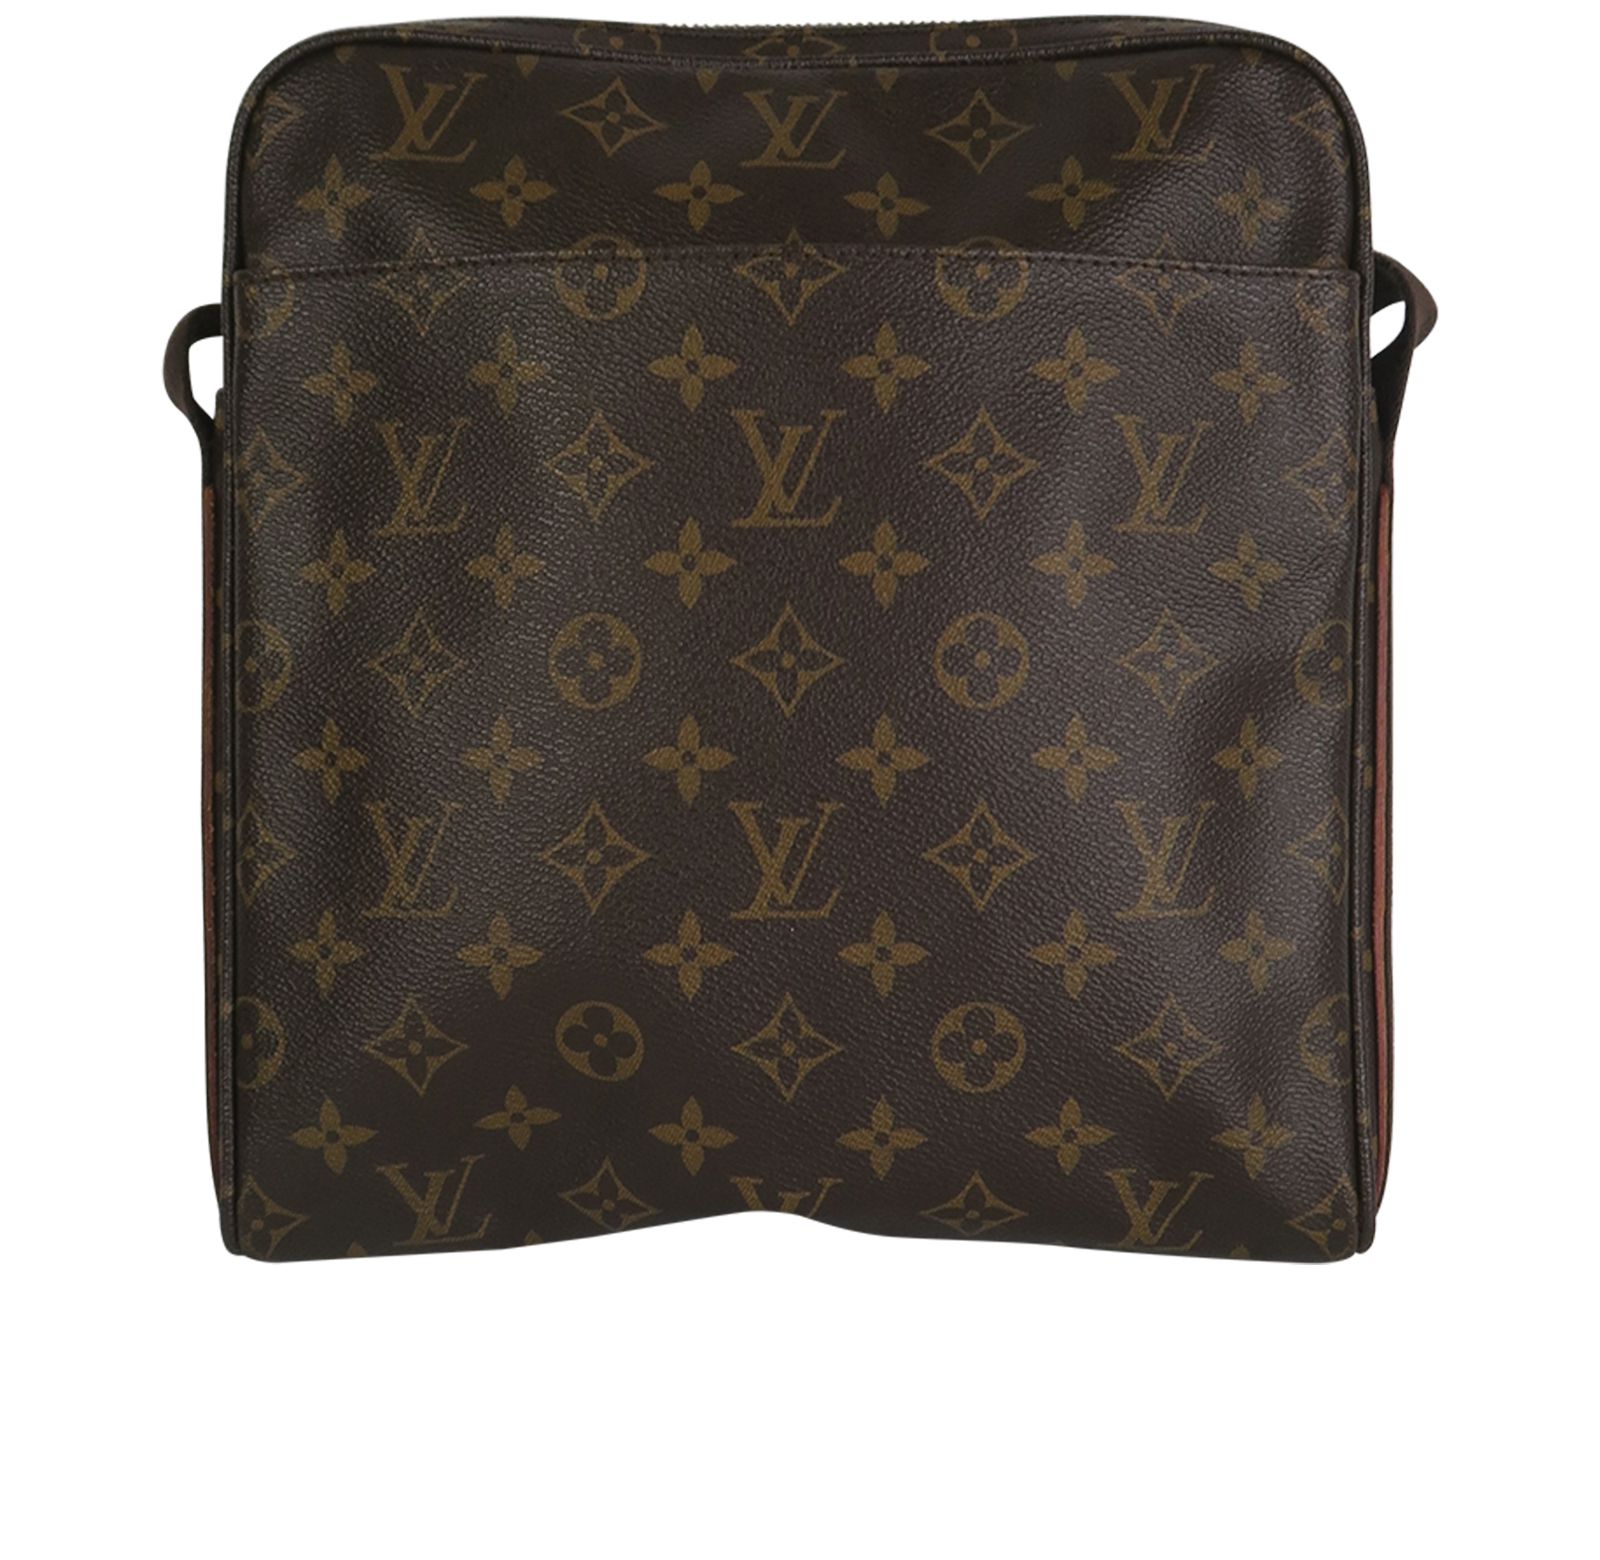 Louis Vuitton - Authenticated Trotteur Handbag - Cloth Brown for Women, Good Condition